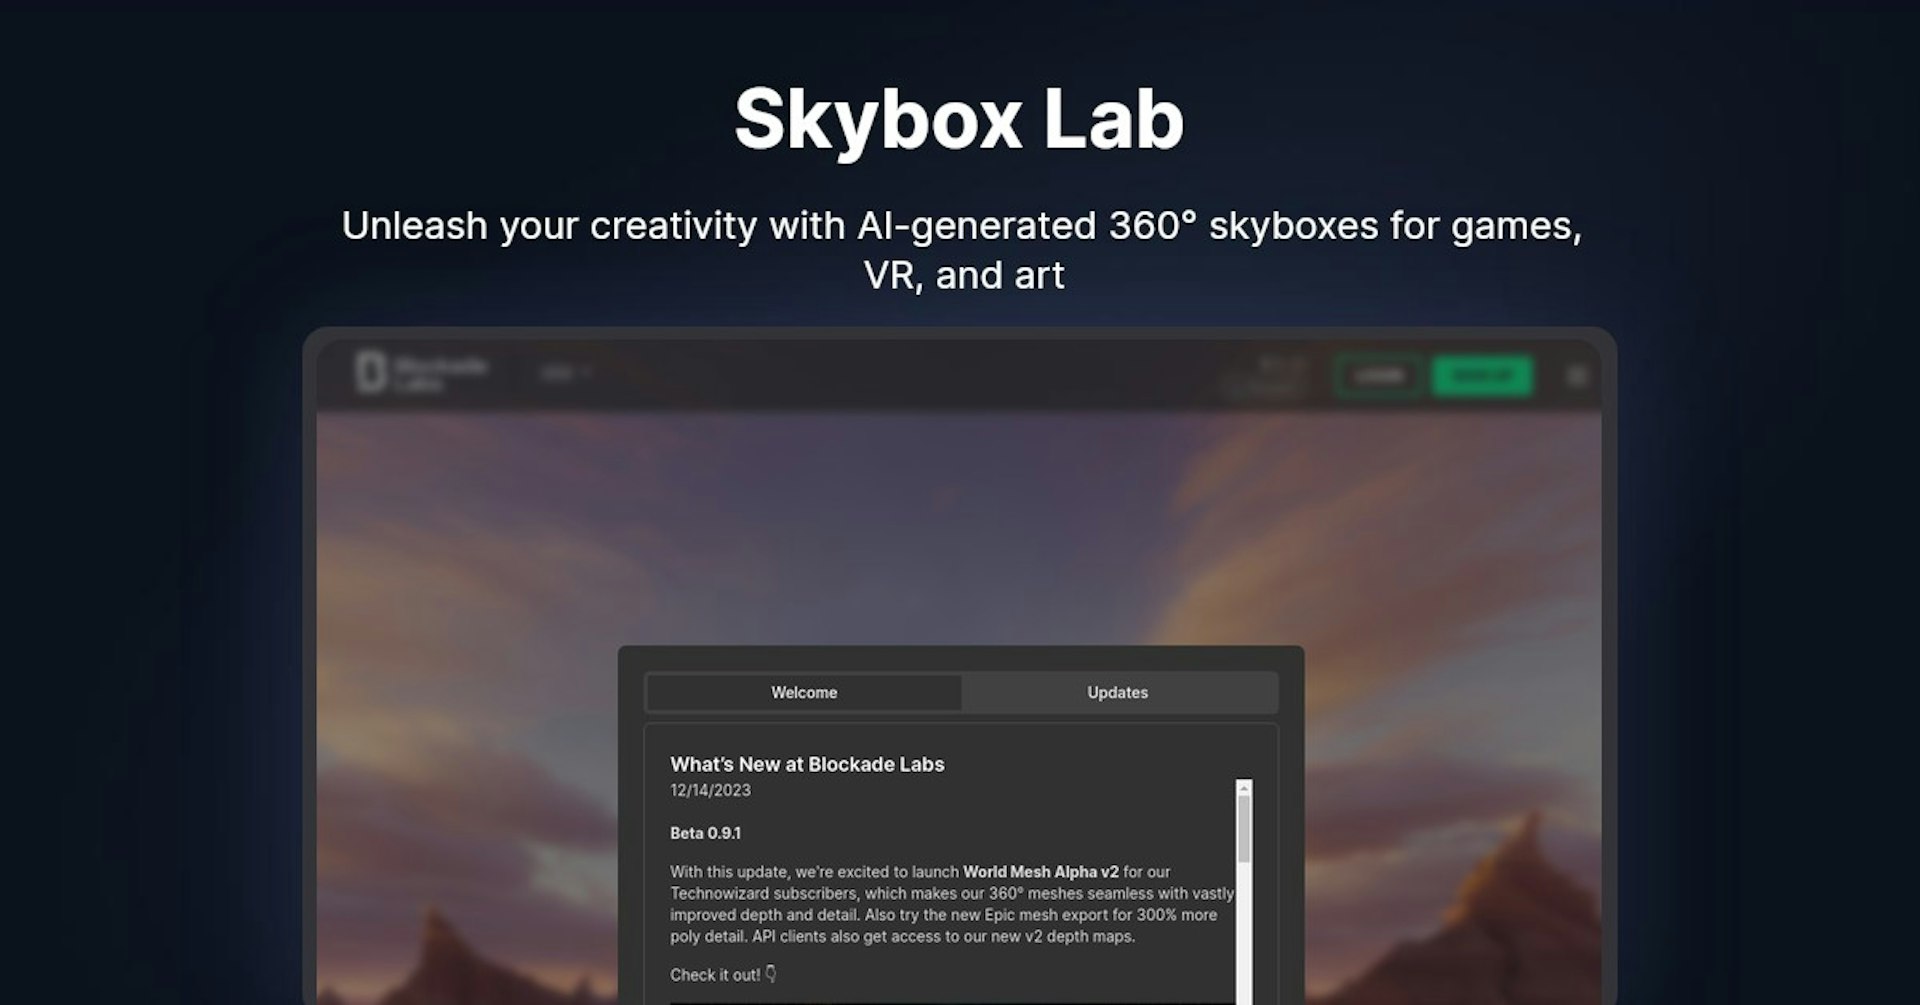 Skybox Lab